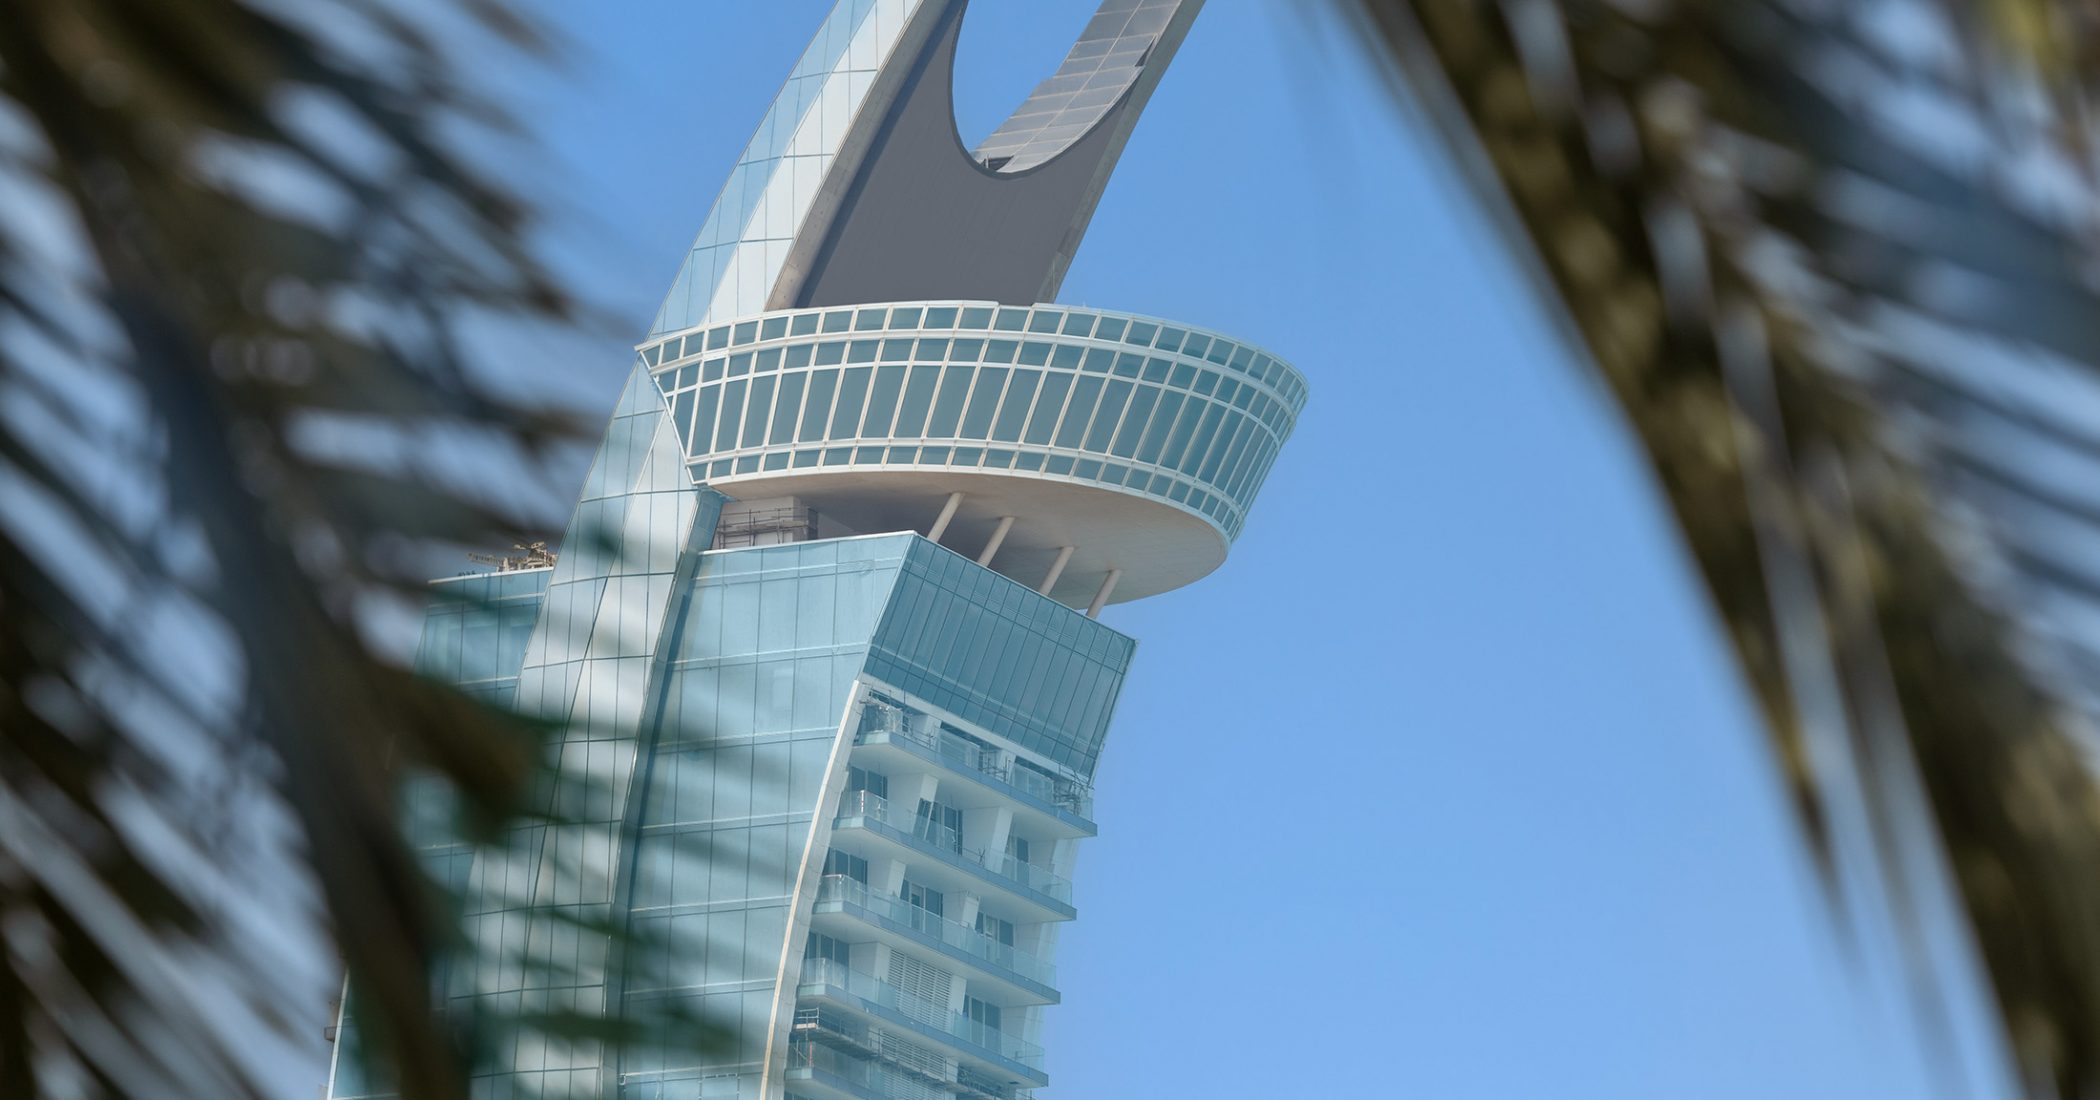 Raffles Doha - An Architectural Masterpiece